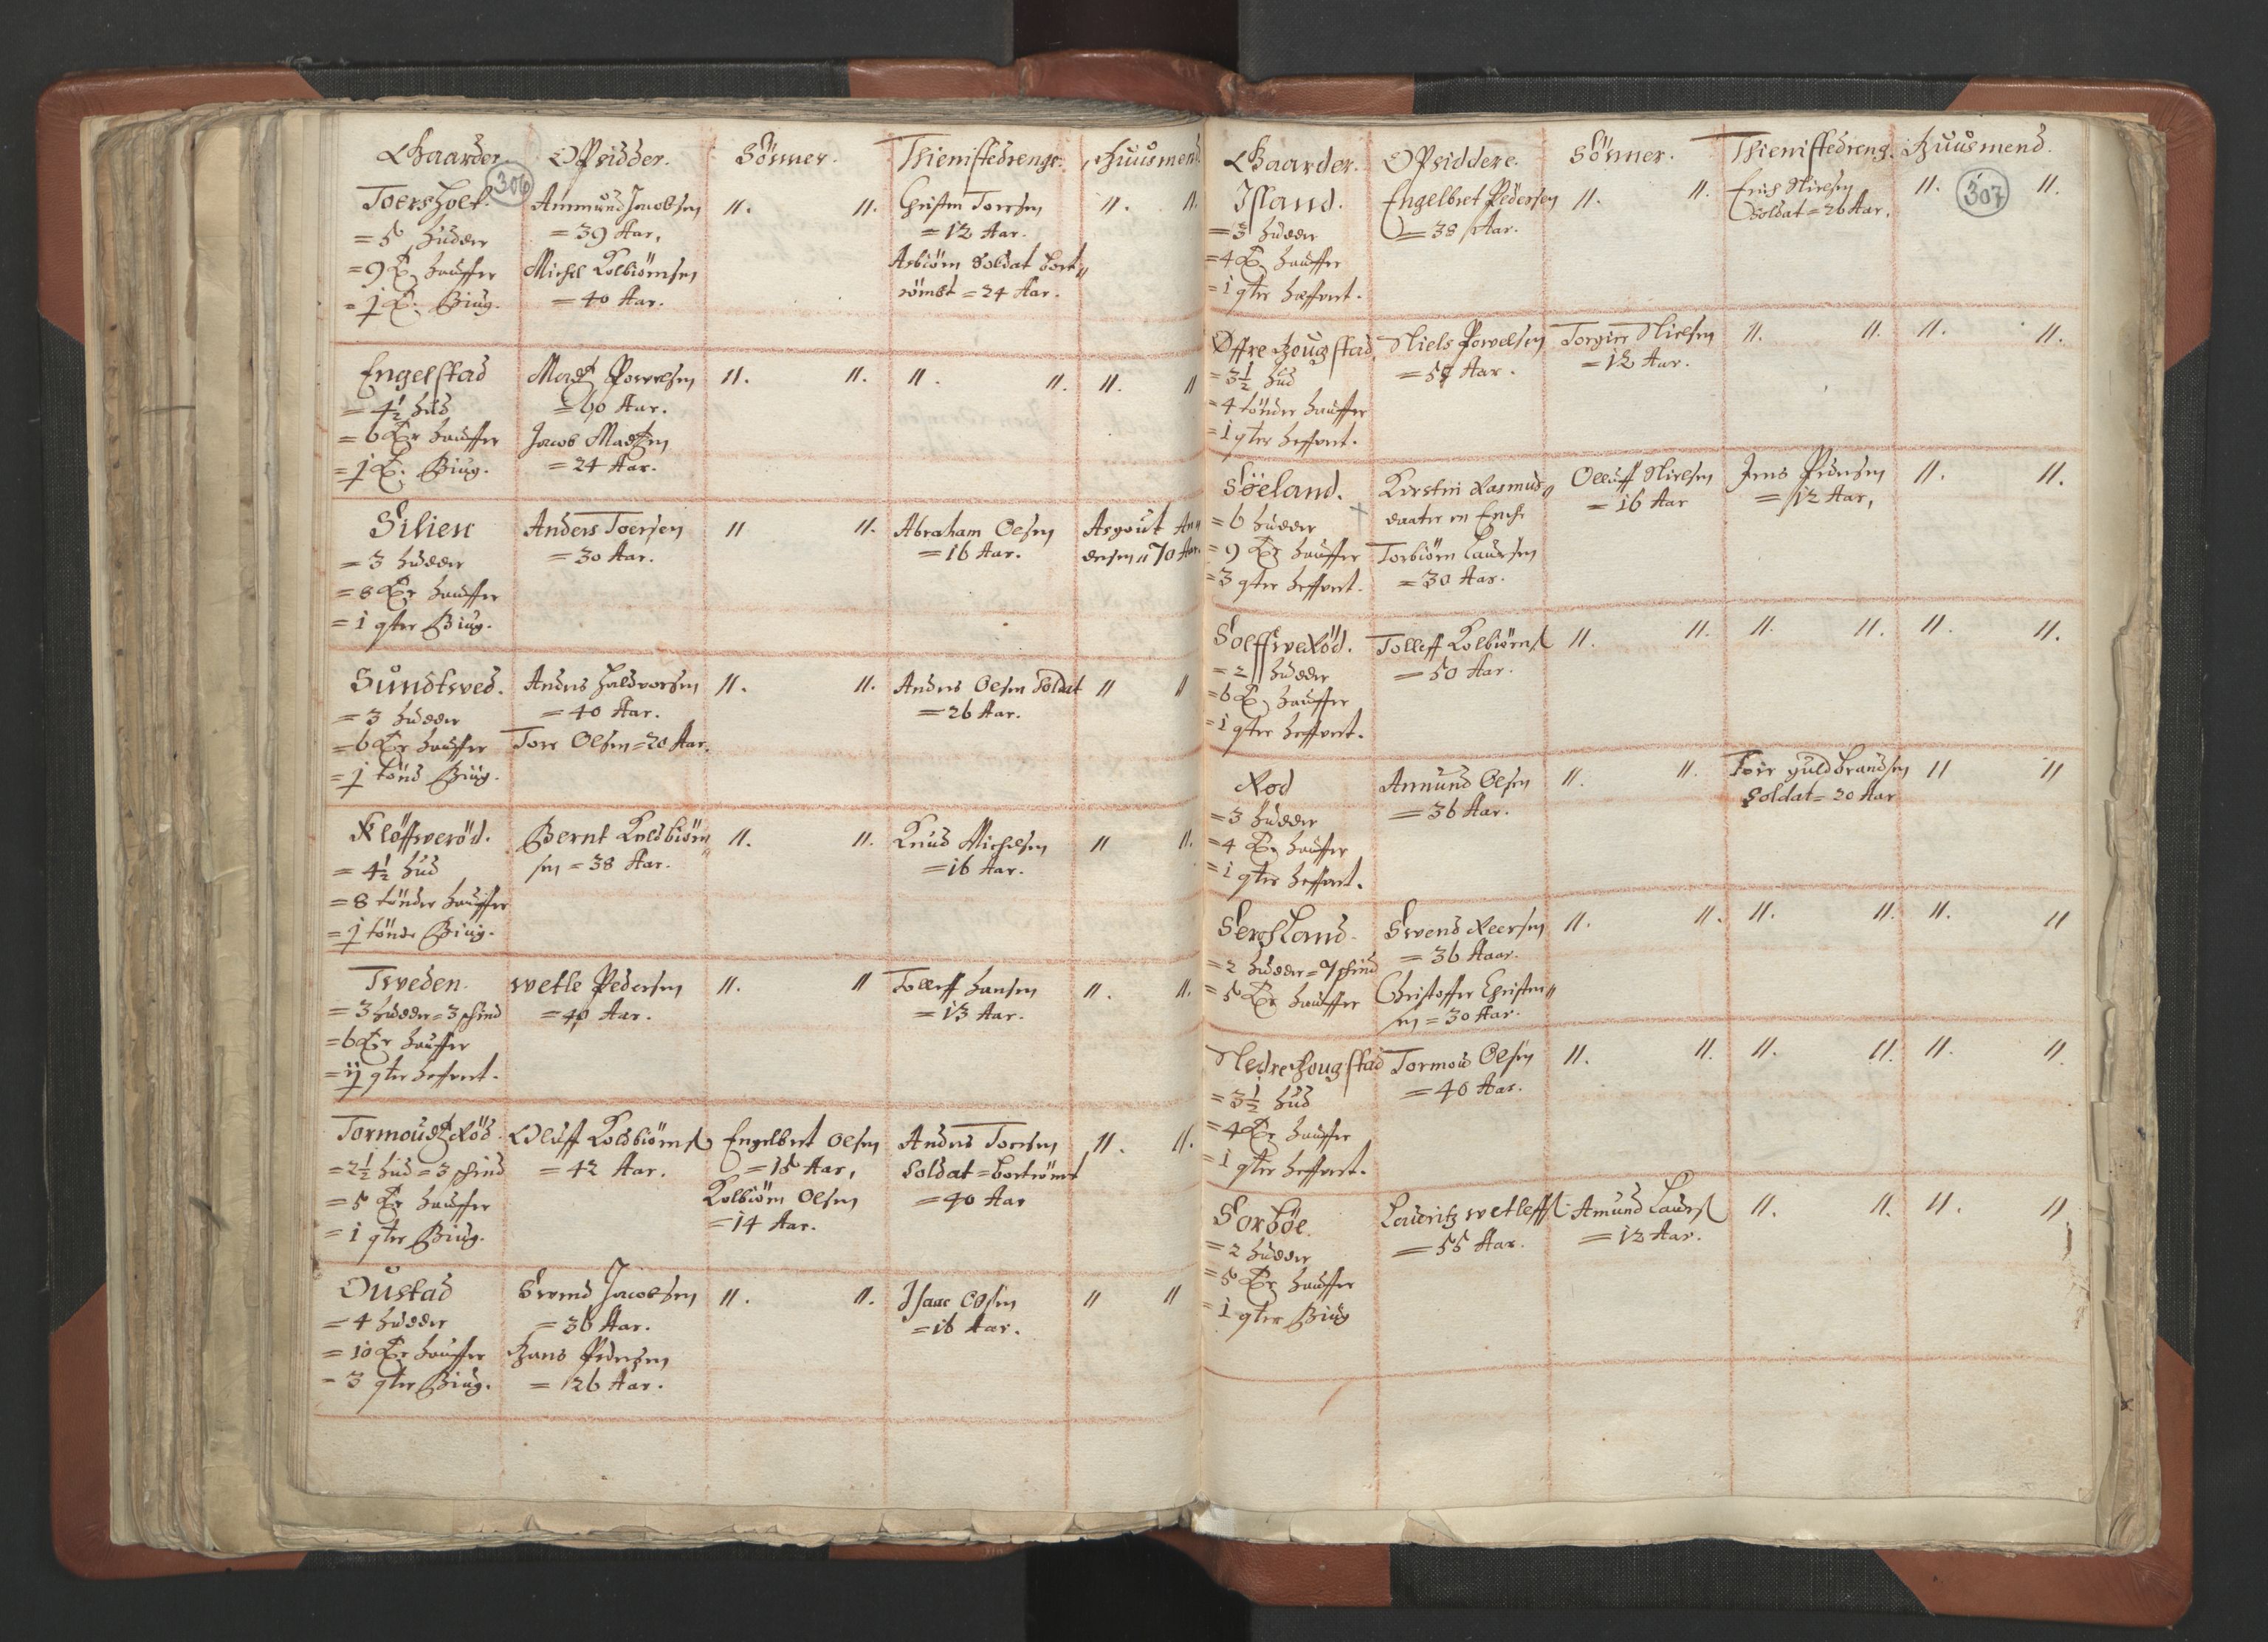 RA, Vicar's Census 1664-1666, no. 12: Øvre Telemark deanery, Nedre Telemark deanery and Bamble deanery, 1664-1666, p. 306-307